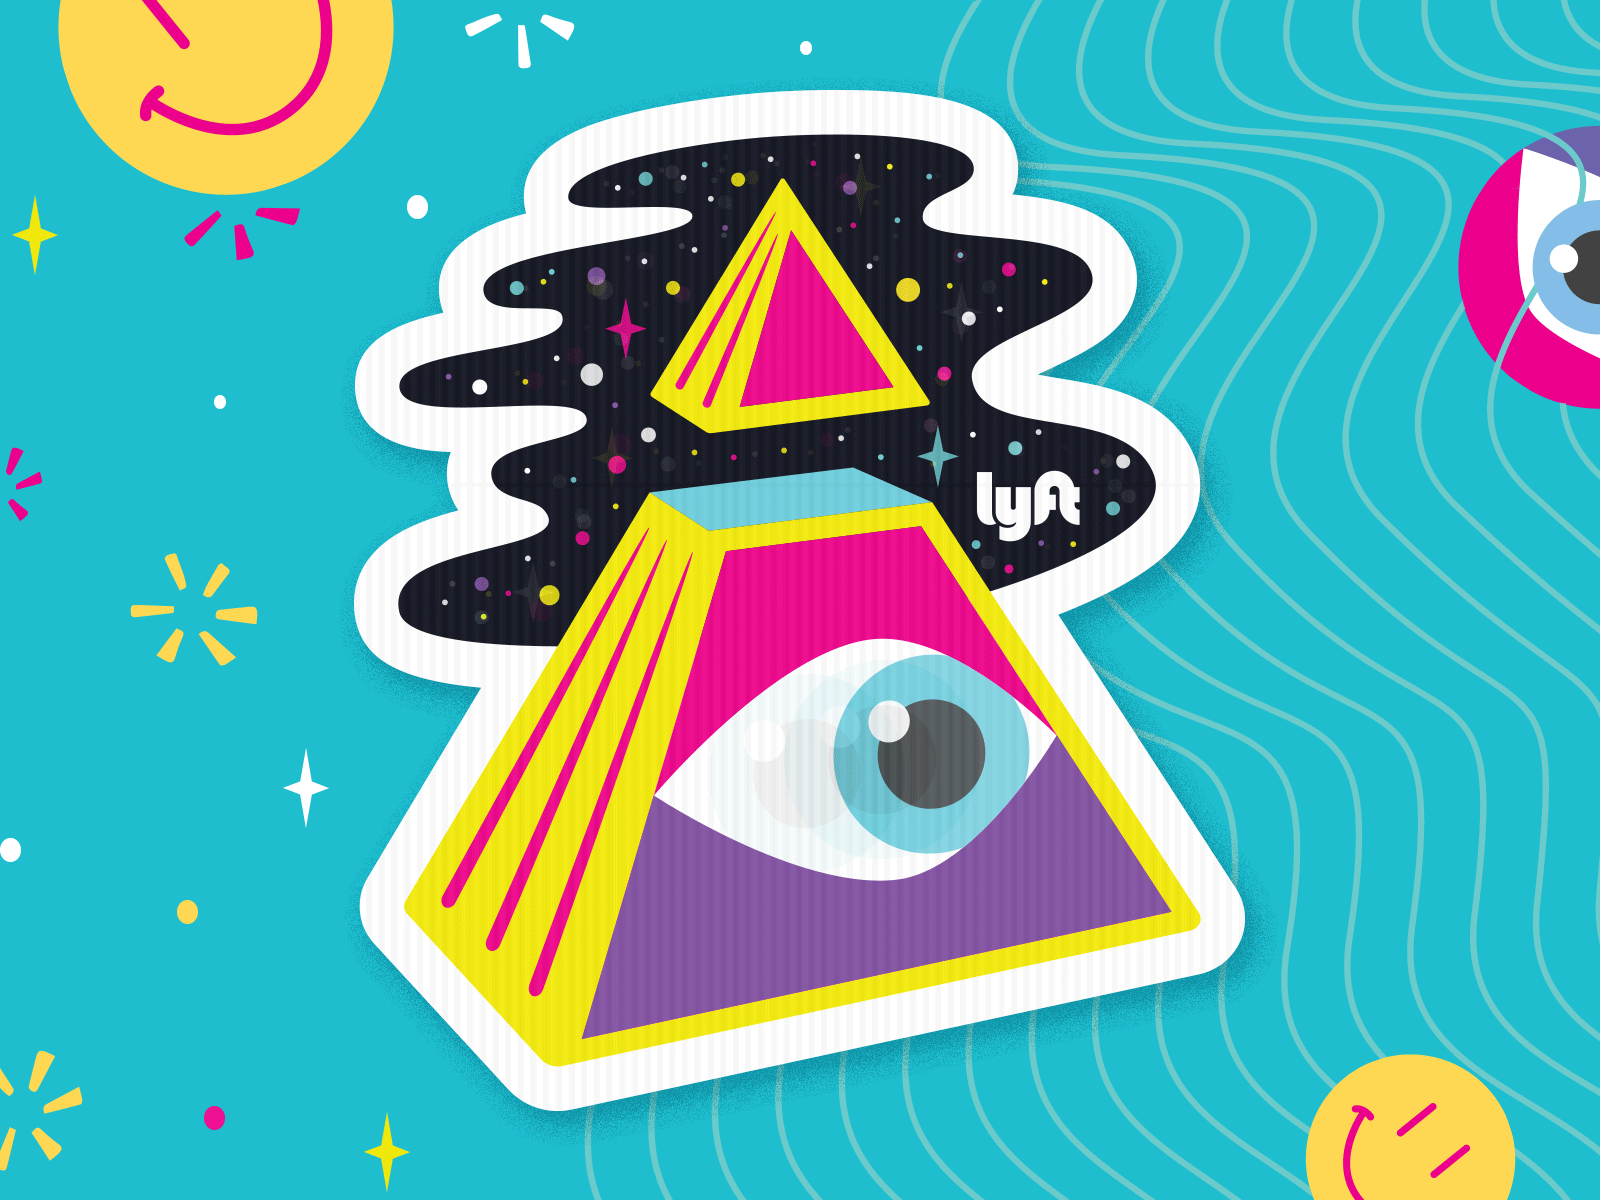 Eyeball Pyramid Sticker eyeball lenticular lyft pyramid space stars sticker trippy